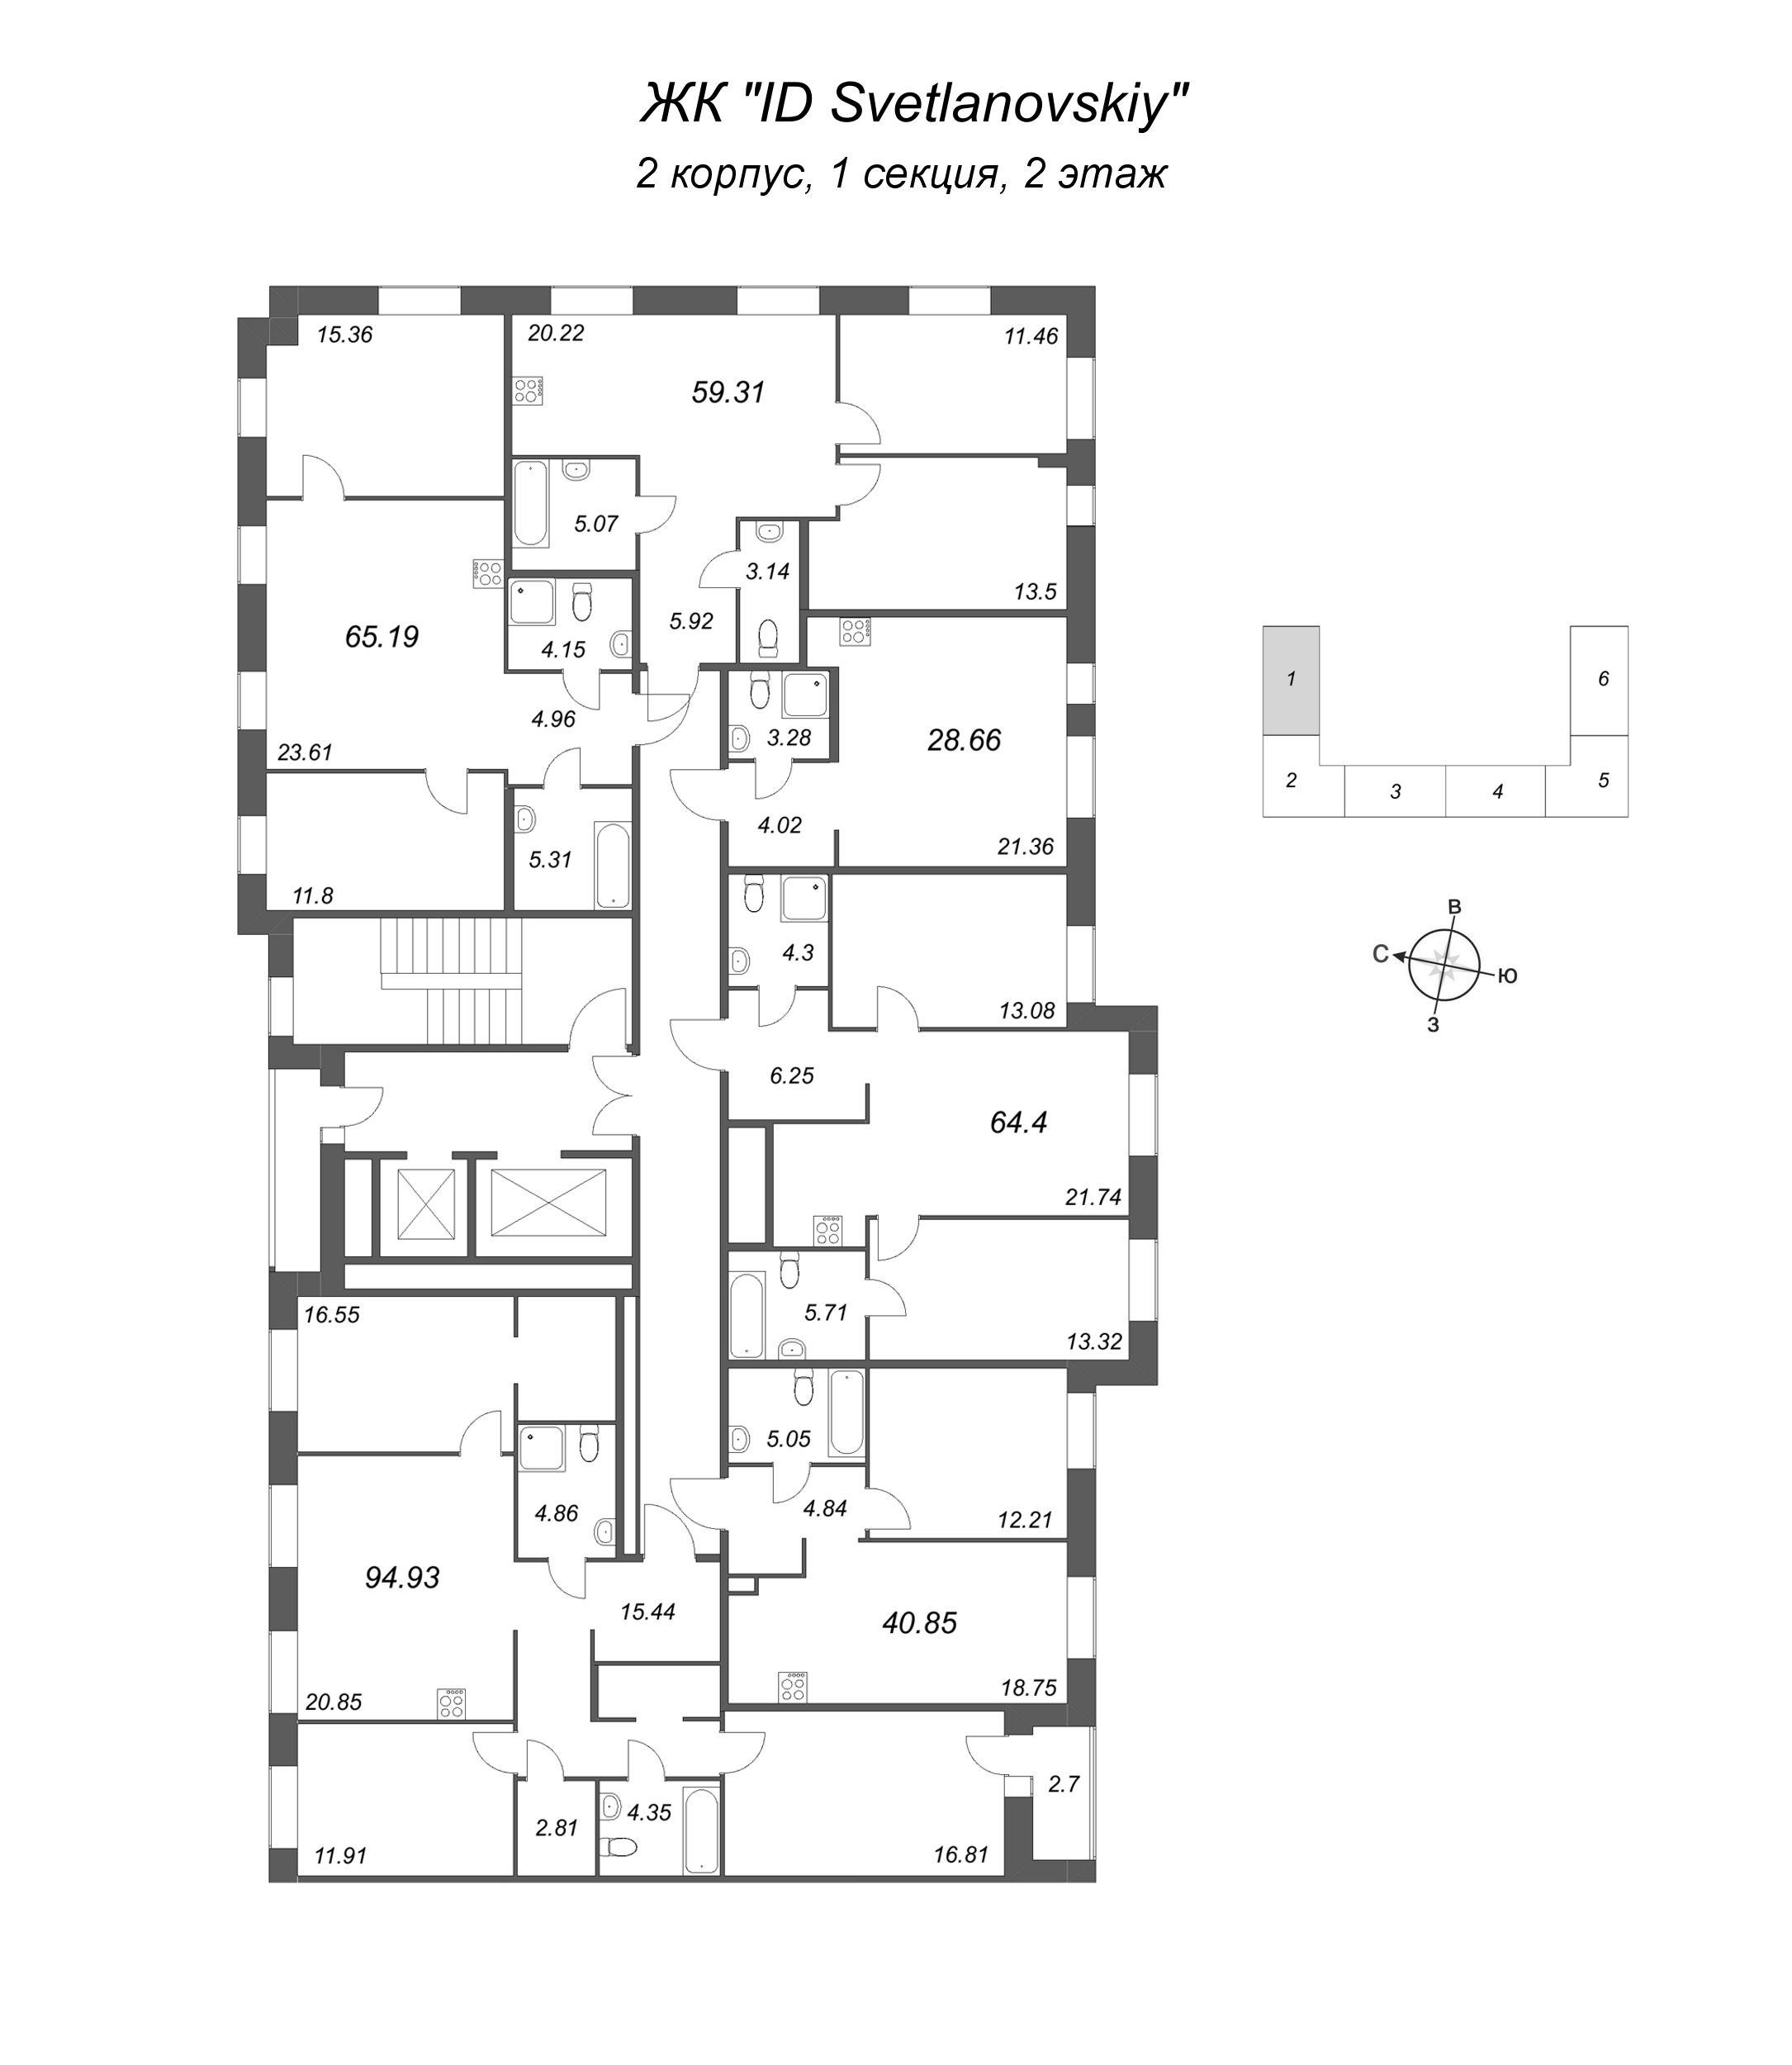 4-комнатная (Евро) квартира, 94.93 м² - планировка этажа